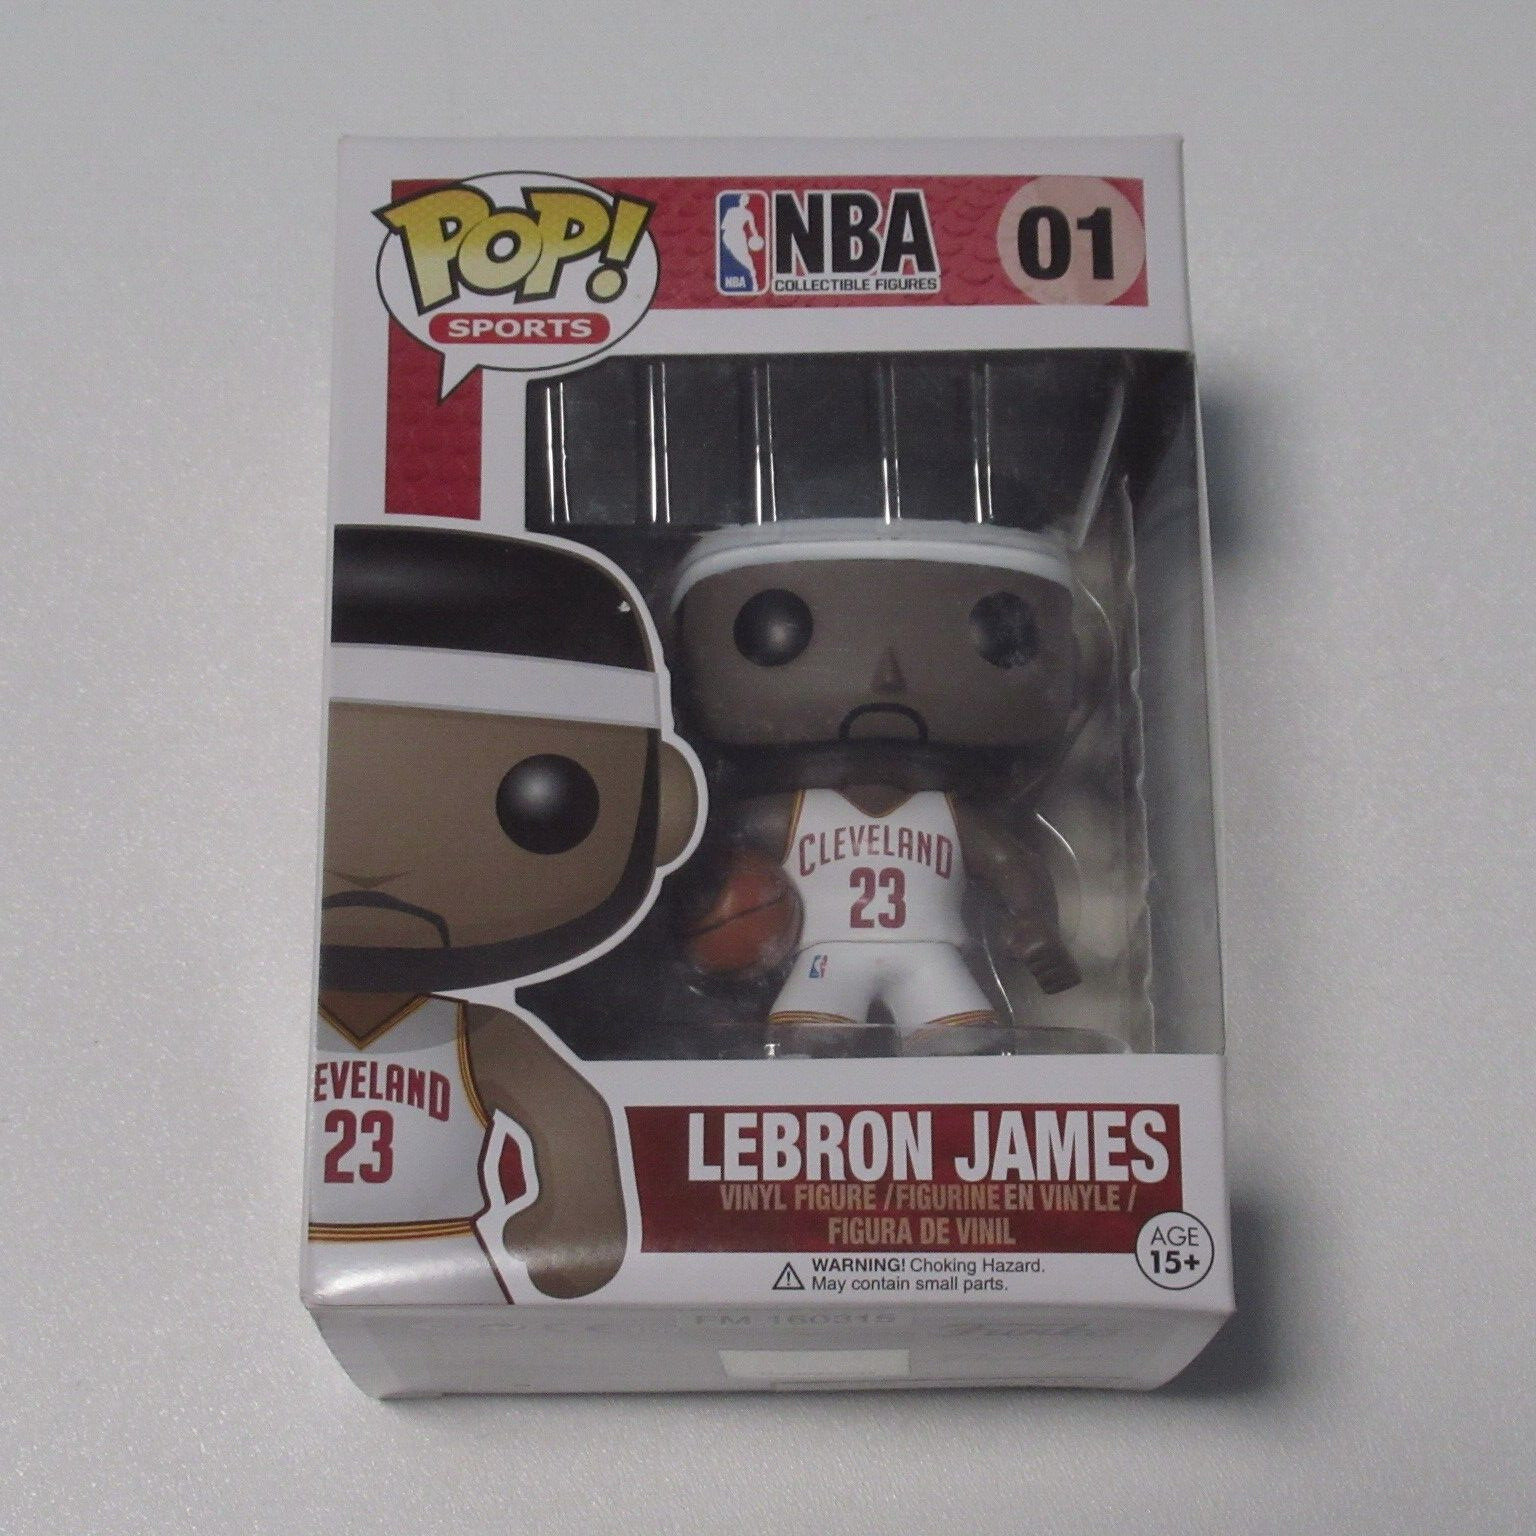 Lebron James Funko Pop #01 NBA Cleveland Cavaliers White Jersey Vinyl Figure